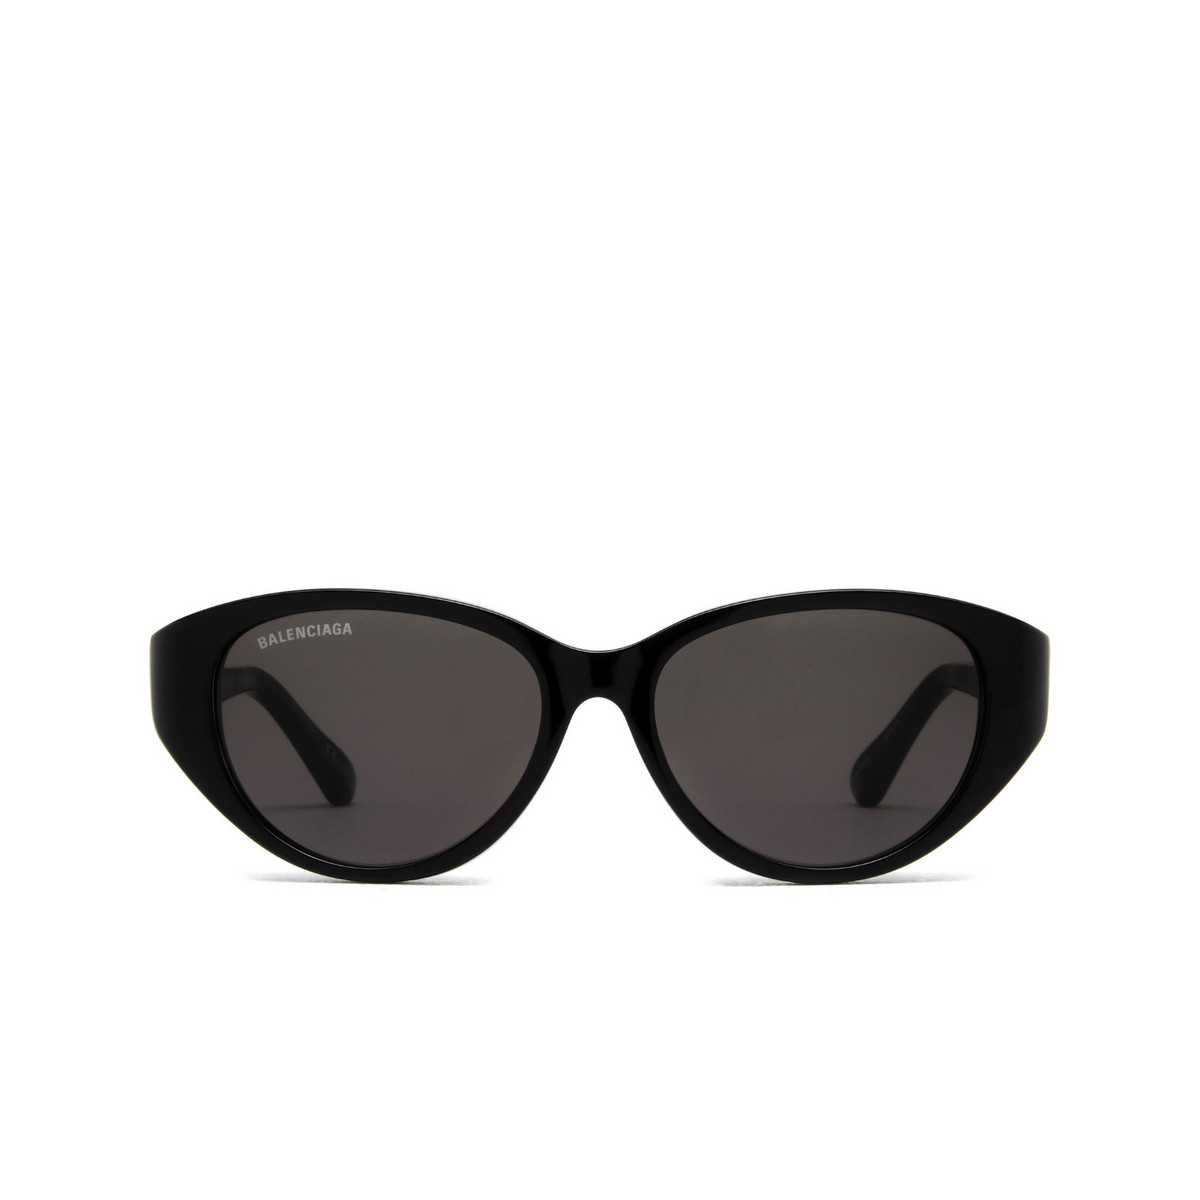 Balenciaga® Oval Sunglasses: BB0209SA color Black 001 - front view.